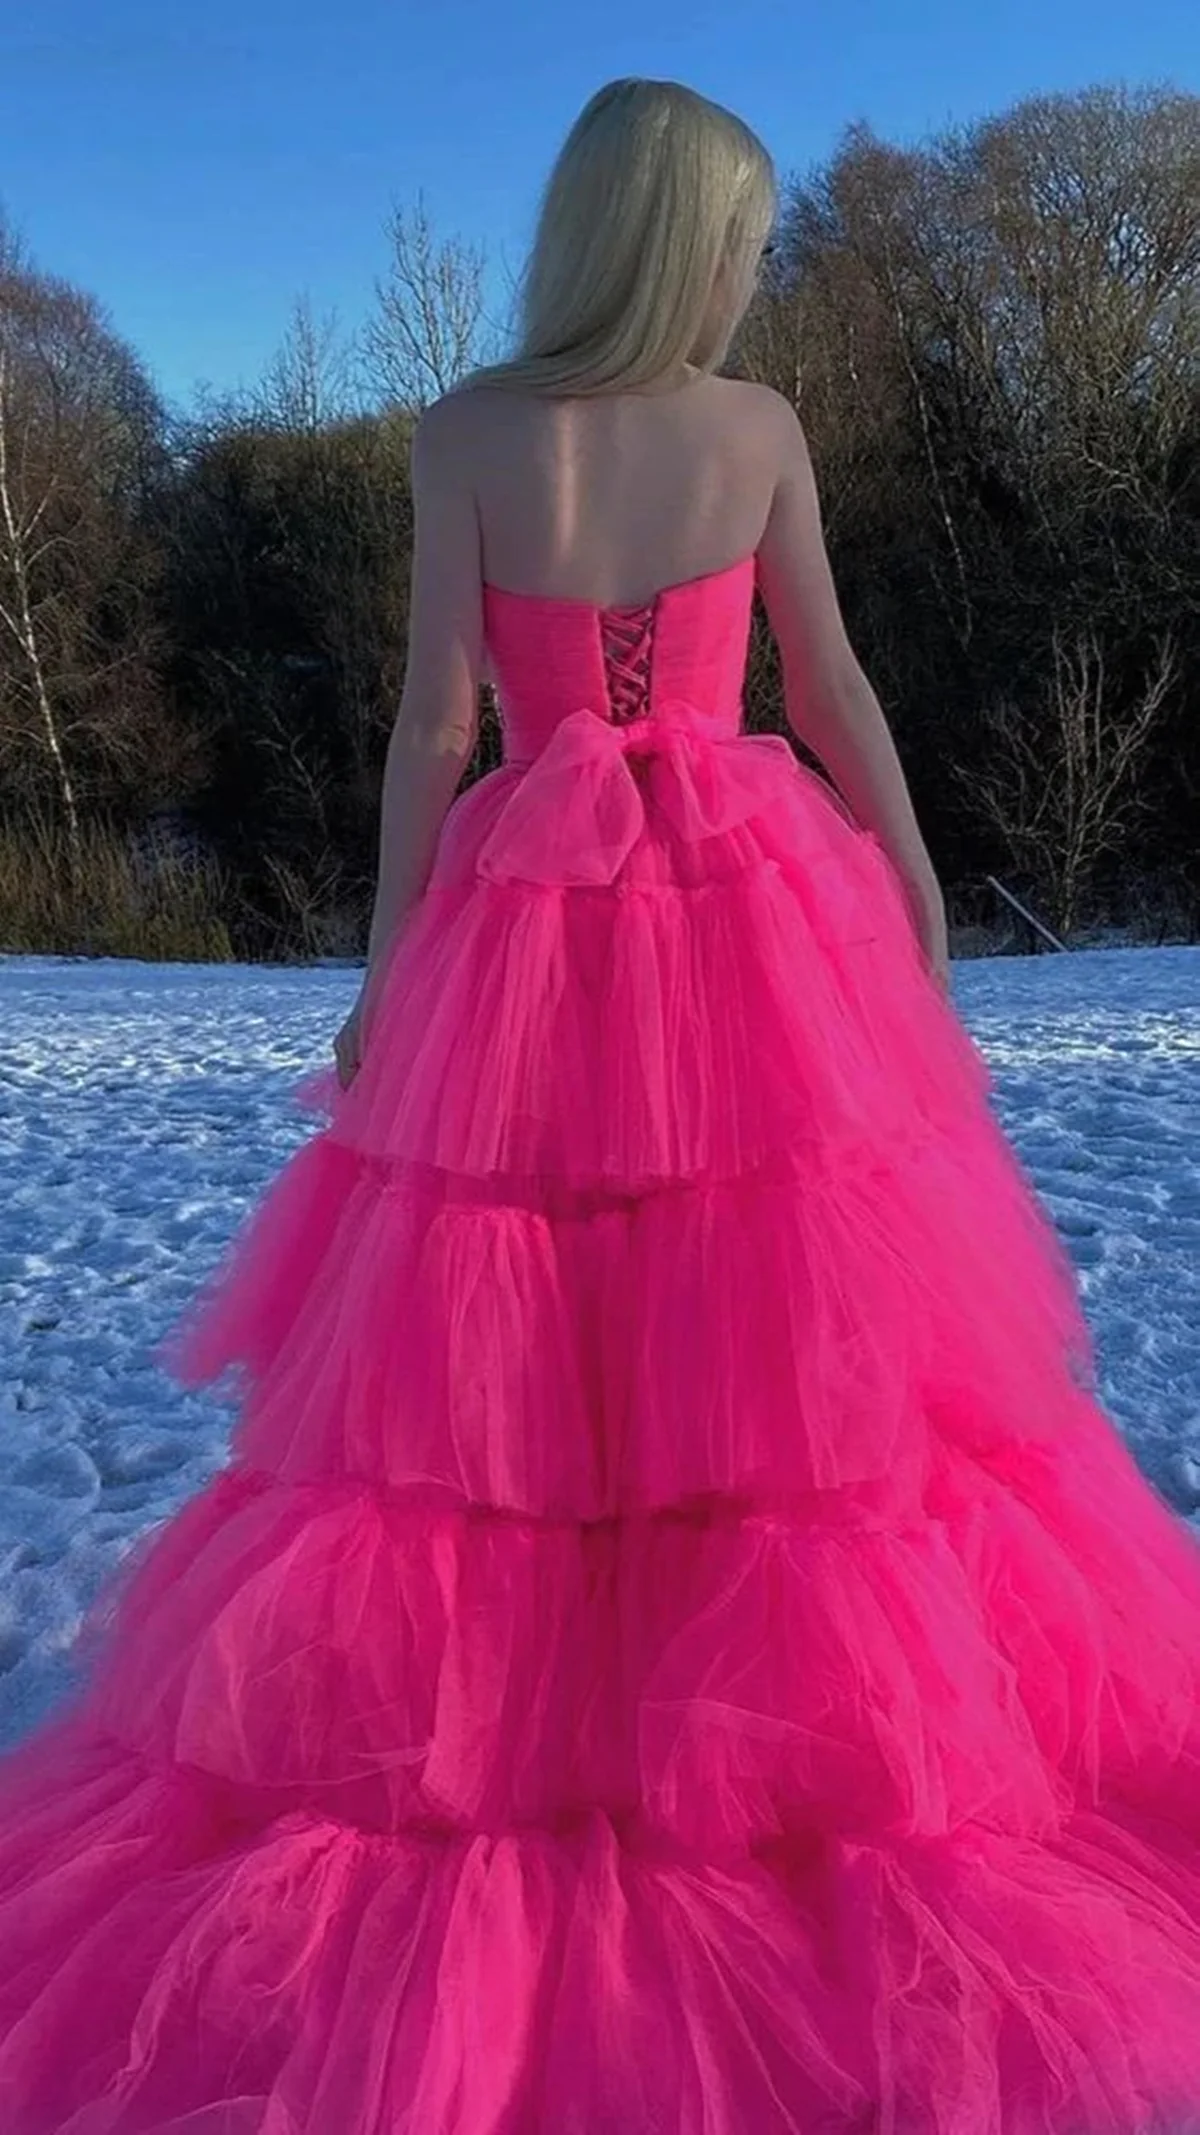 Charming Sweetheart Mermaid Prom Dresses, Evening Dress Prom Gowns, Formal Women Dress,Prom Dress             cg23222